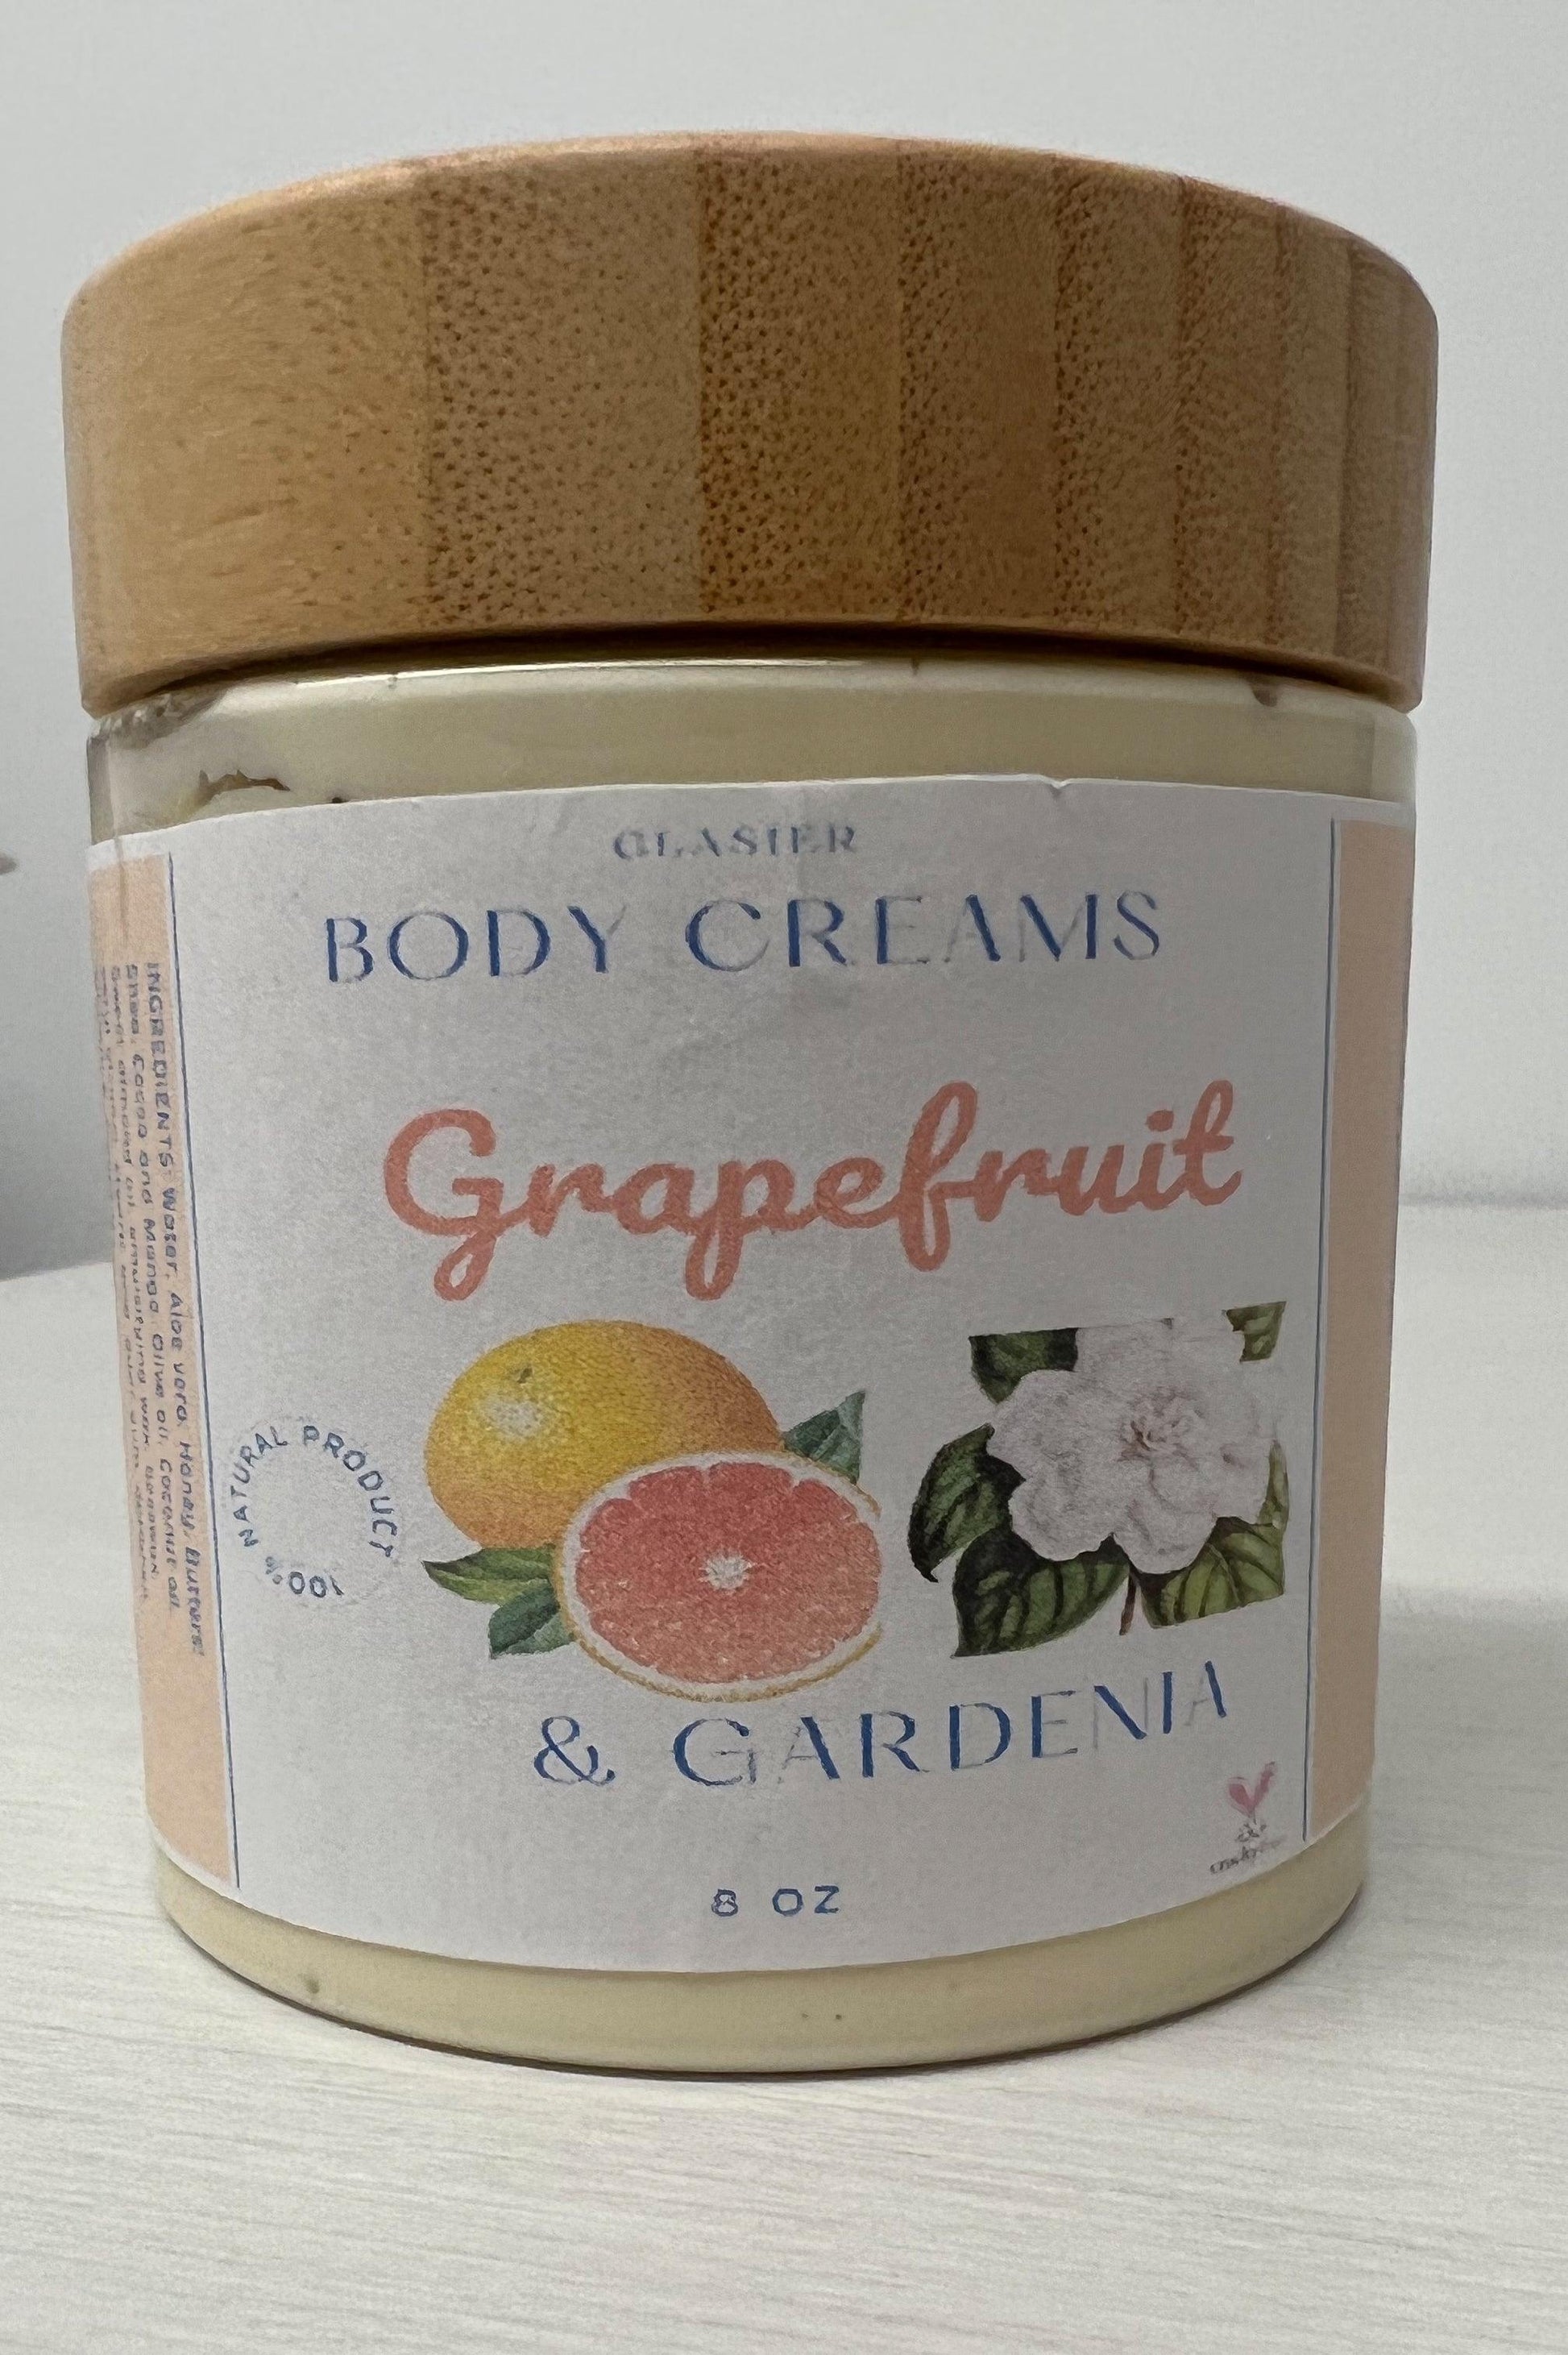 Grapefruit and Gardenia - Glasier Body Creams